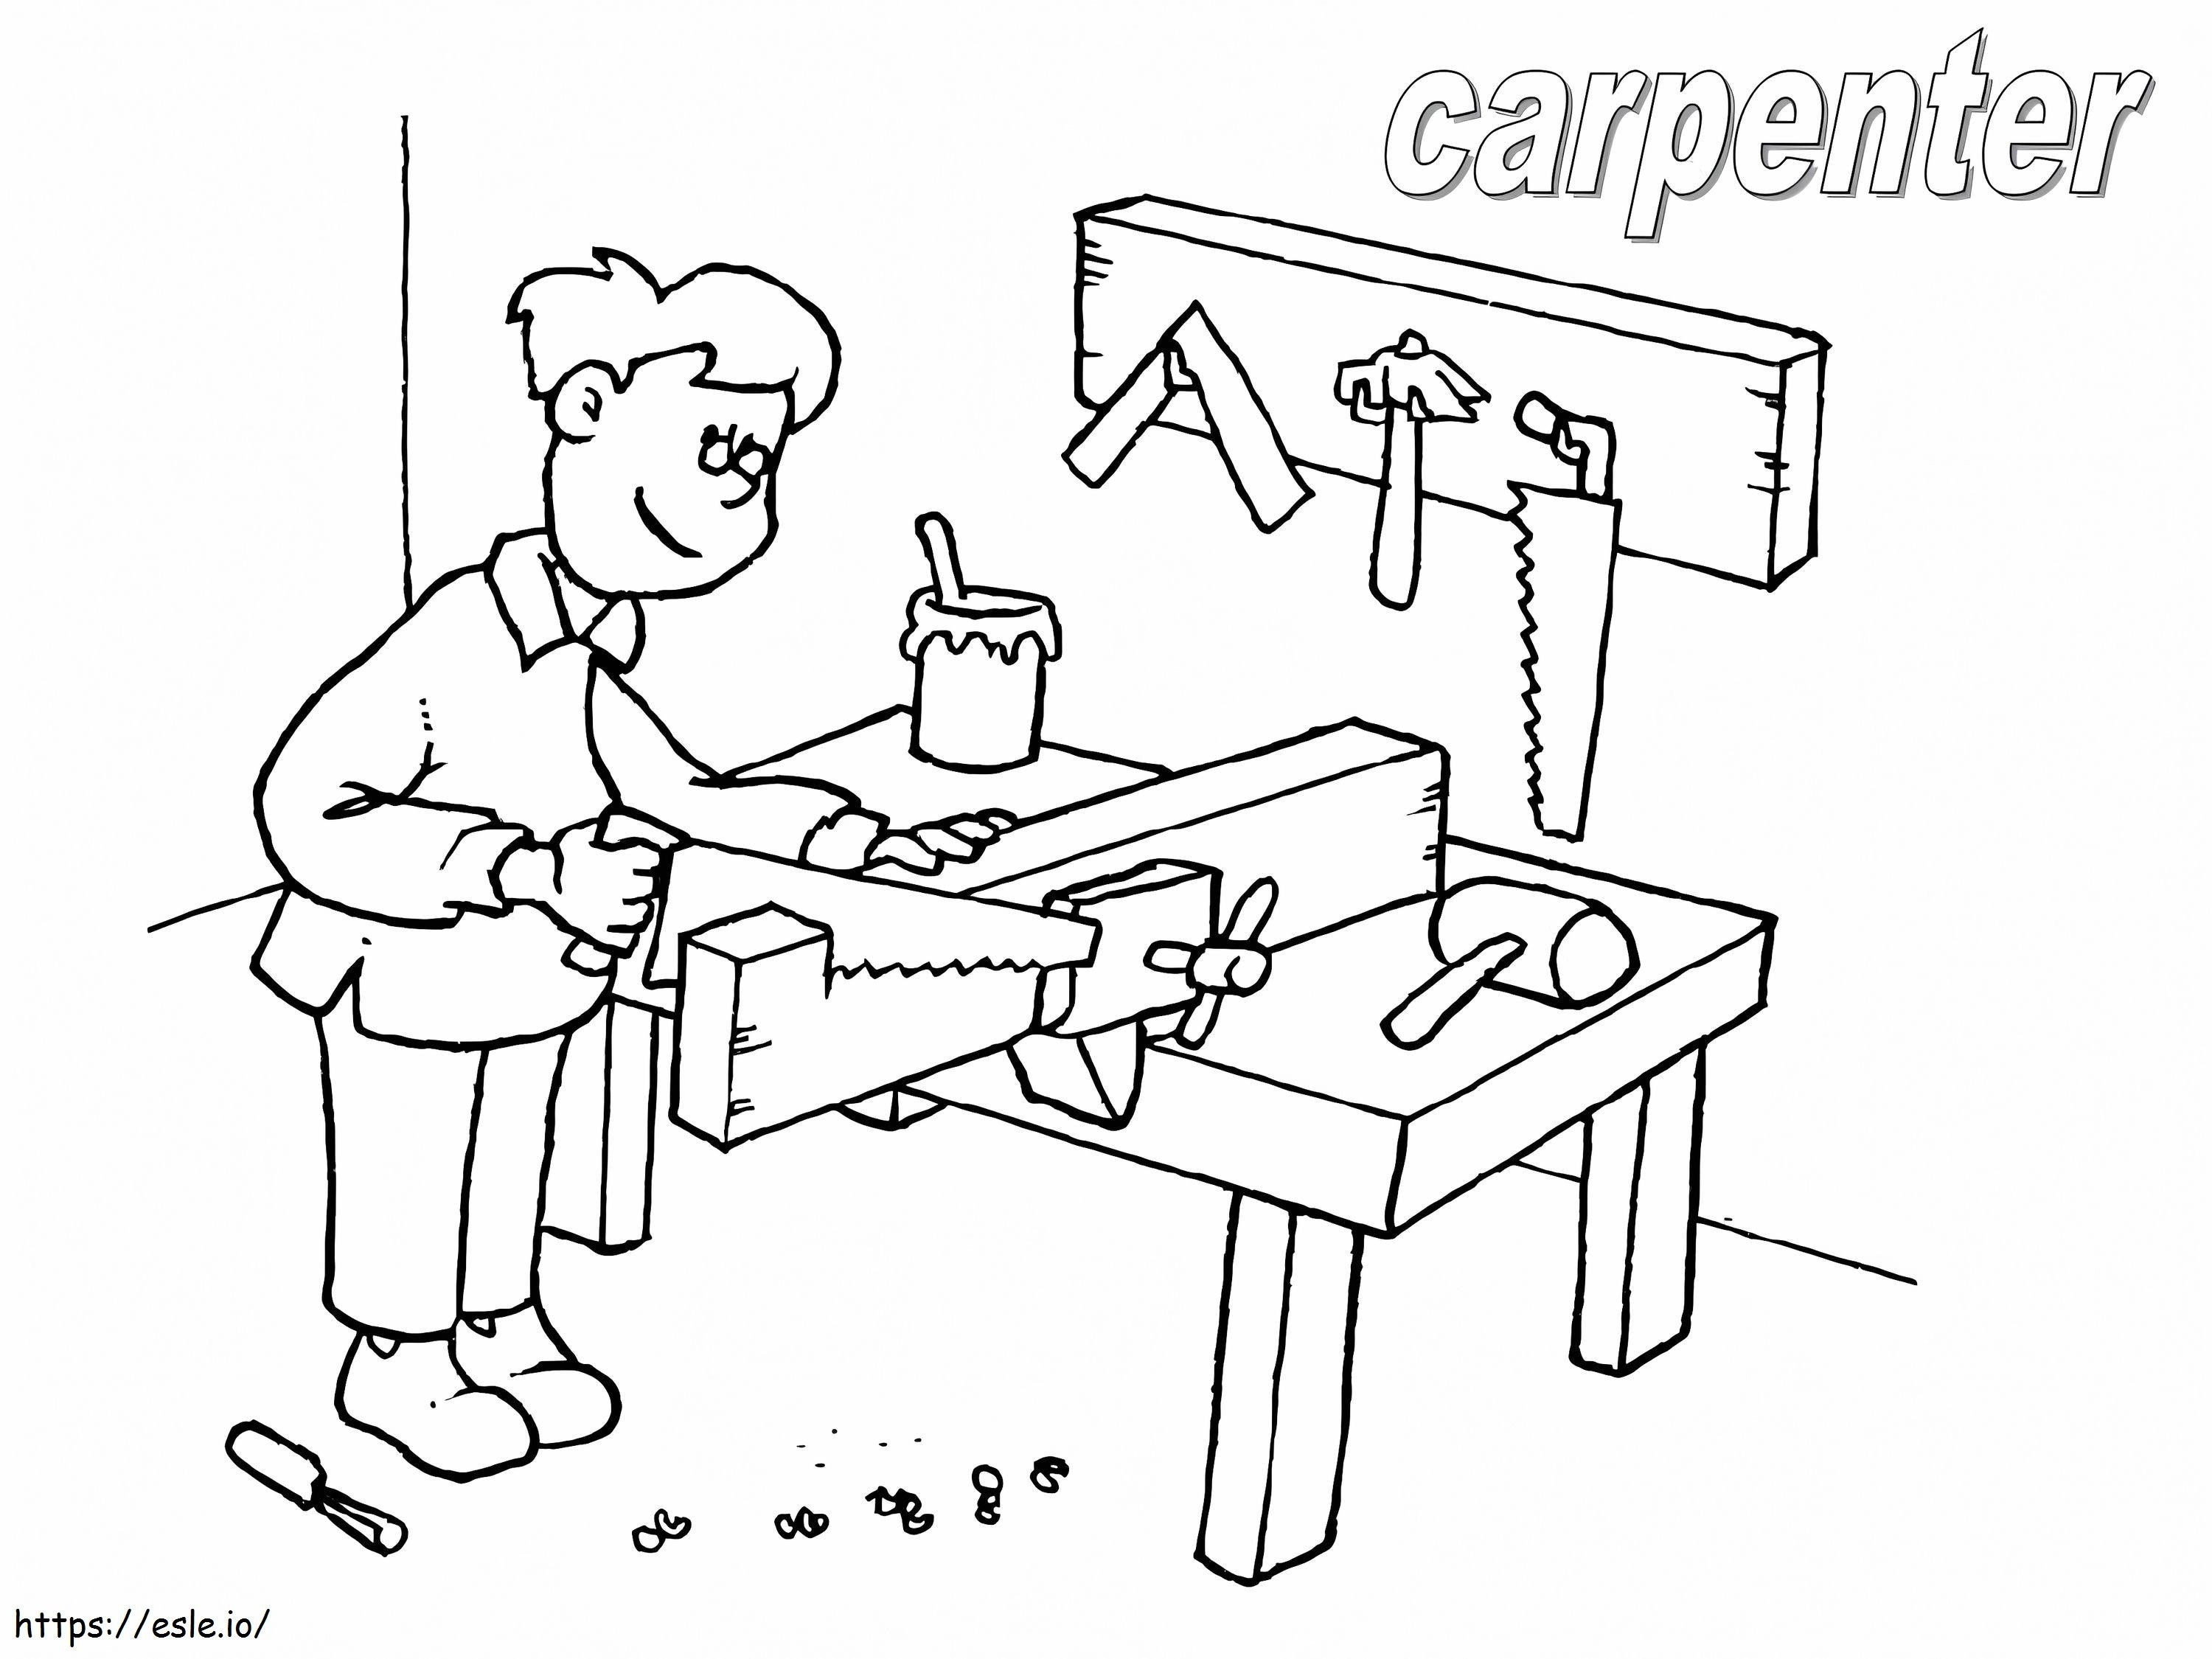 Carpenter 10 coloring page